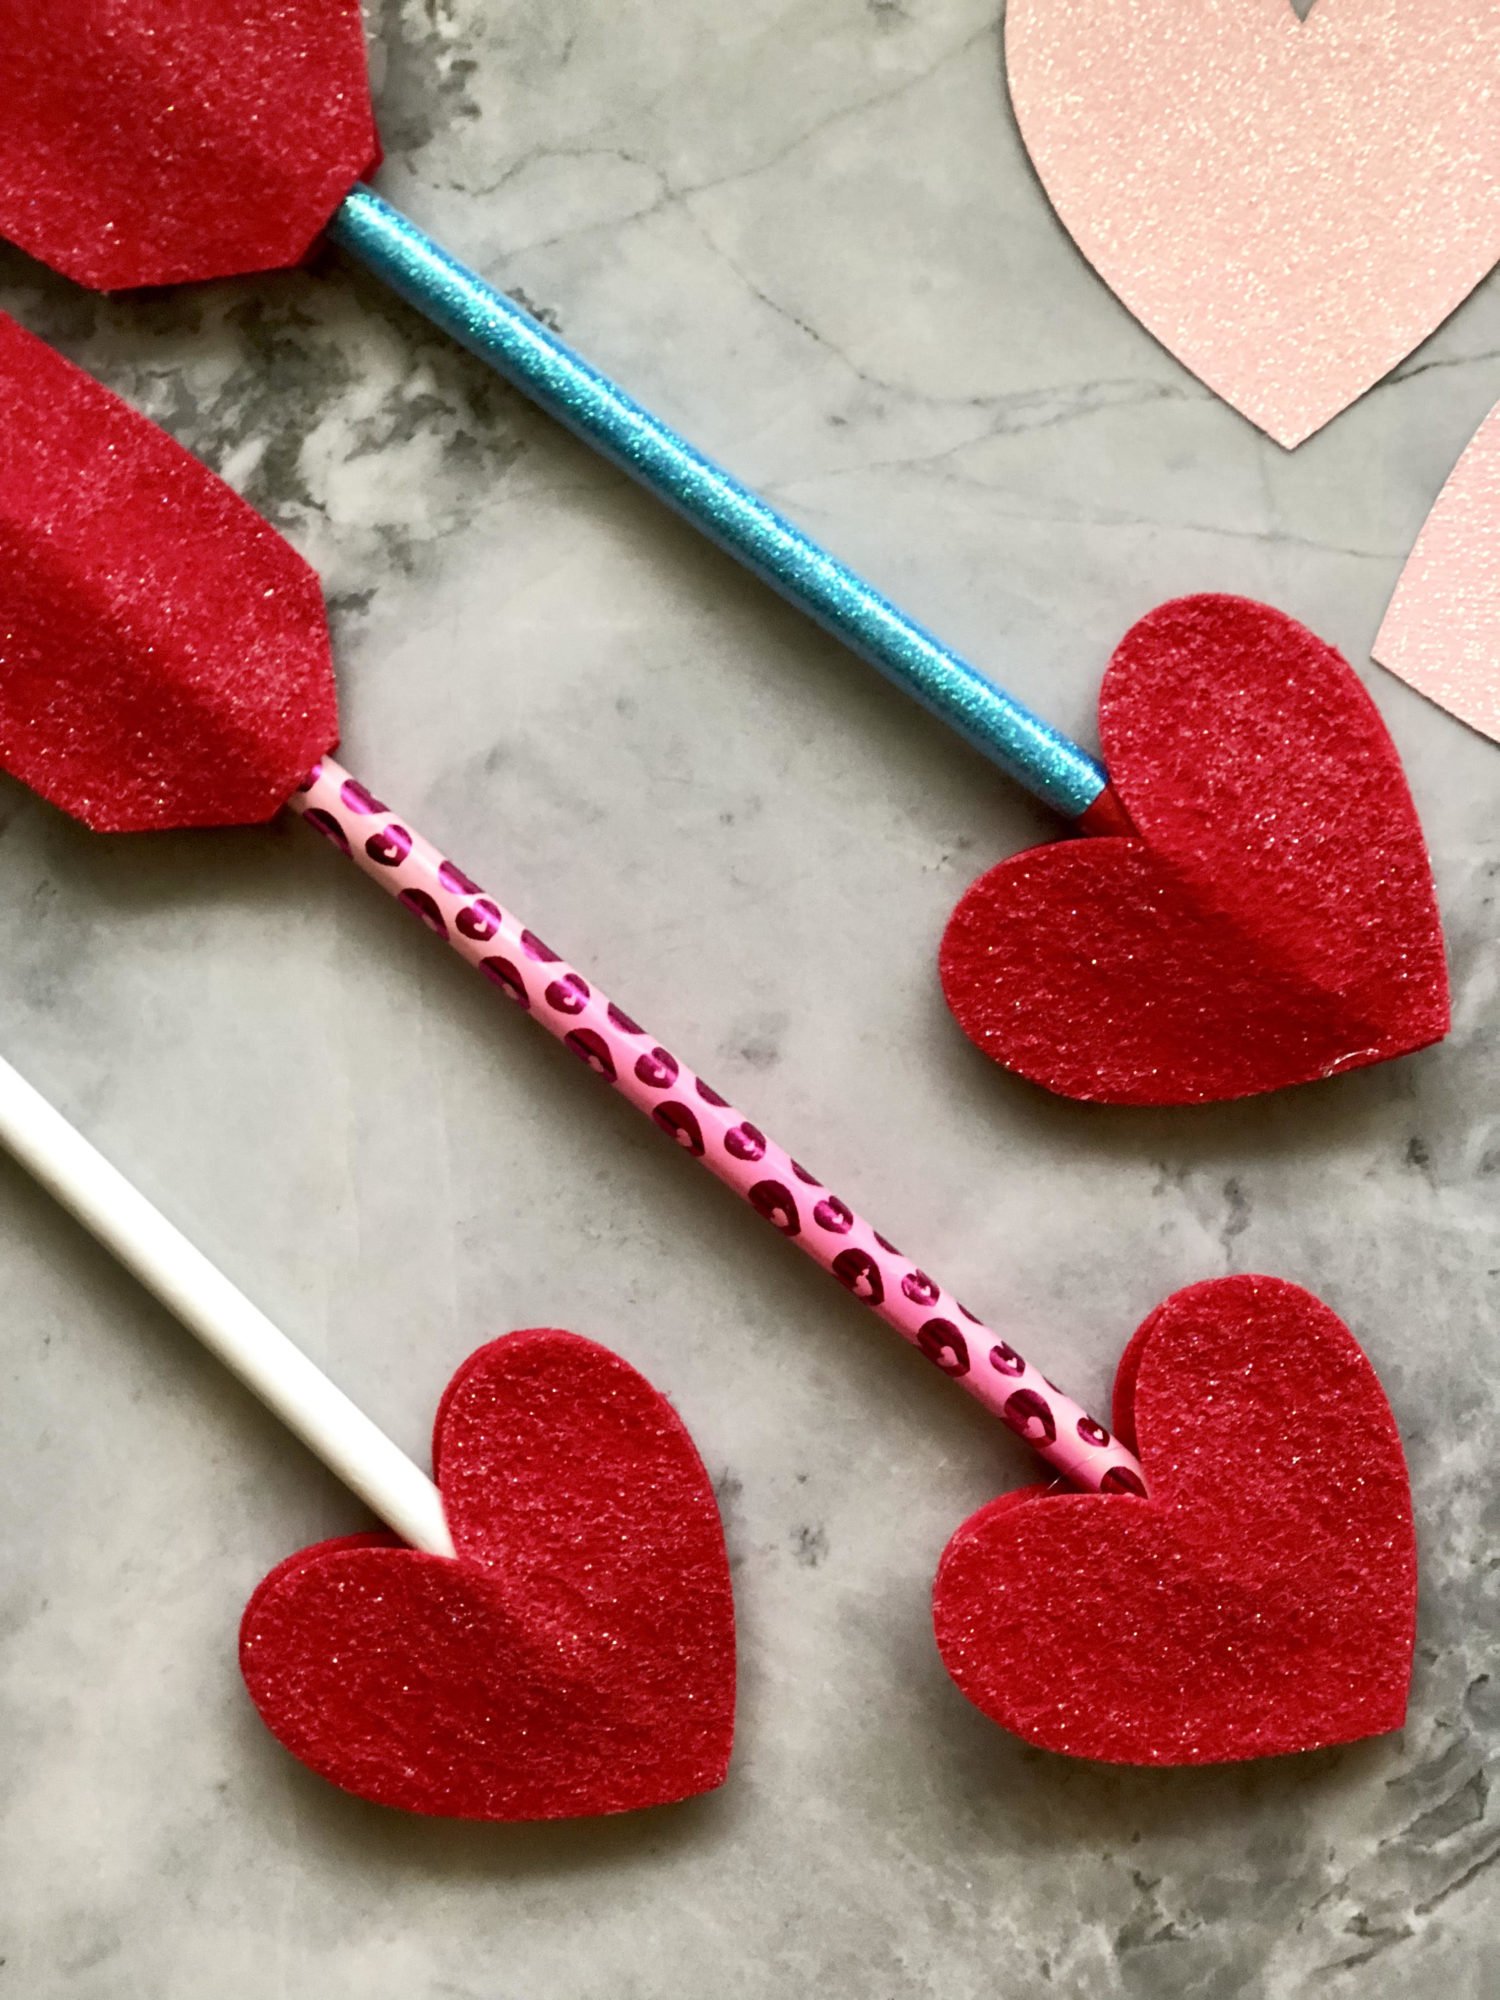 Cupid's Arrow Pencil Valentine Printable- Free Valentine's Day Printable